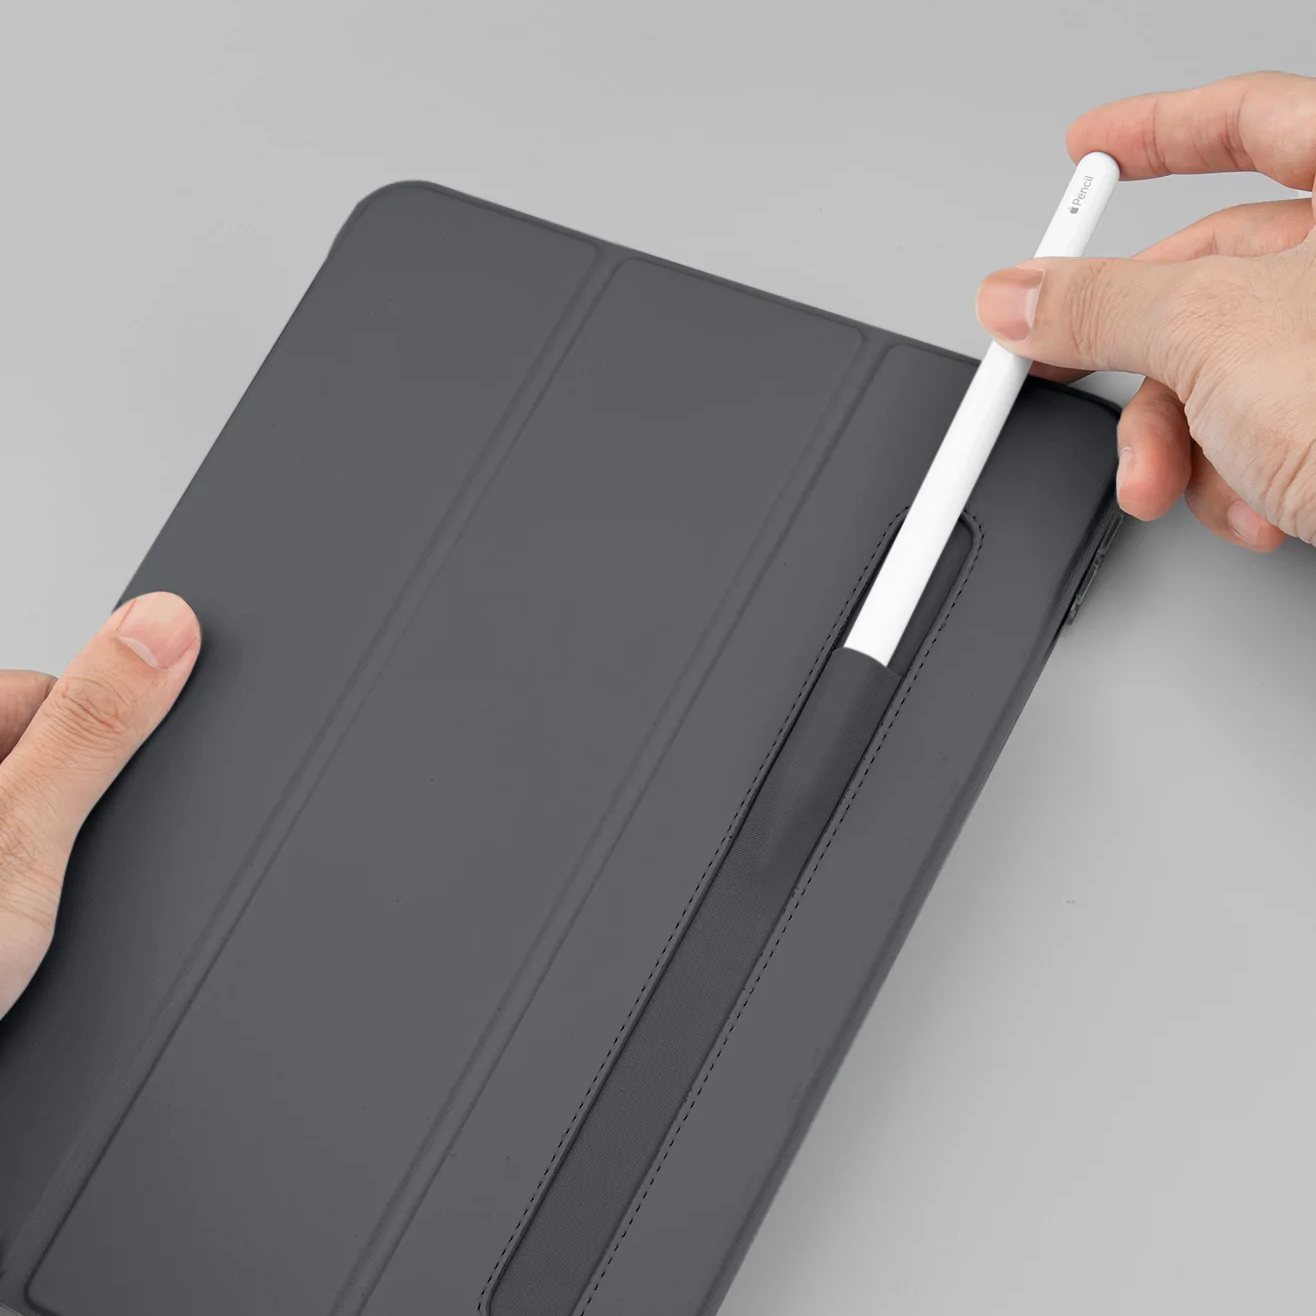 LAUT HUEX Folio 透亮 2022 iPad Pro 12.9吋 6代 含筆槽平板保護套, 灰